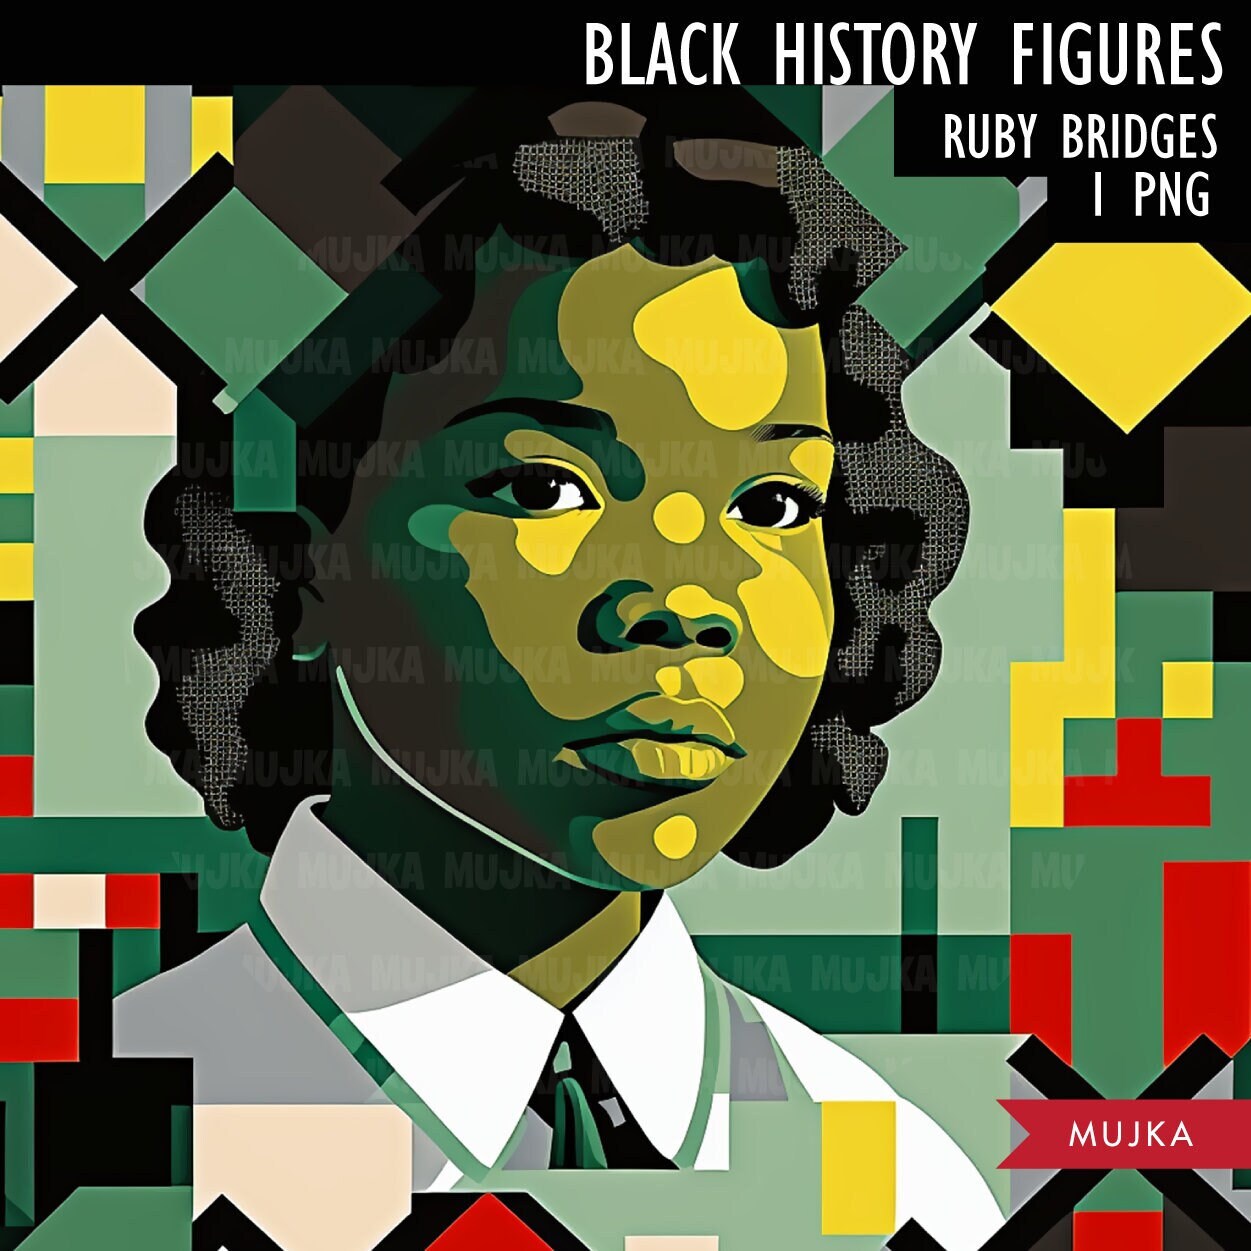 Black History PNG, Ruby Bridges poster, Black History Cards, printable Black History Art, Black History wall art, sublimation design